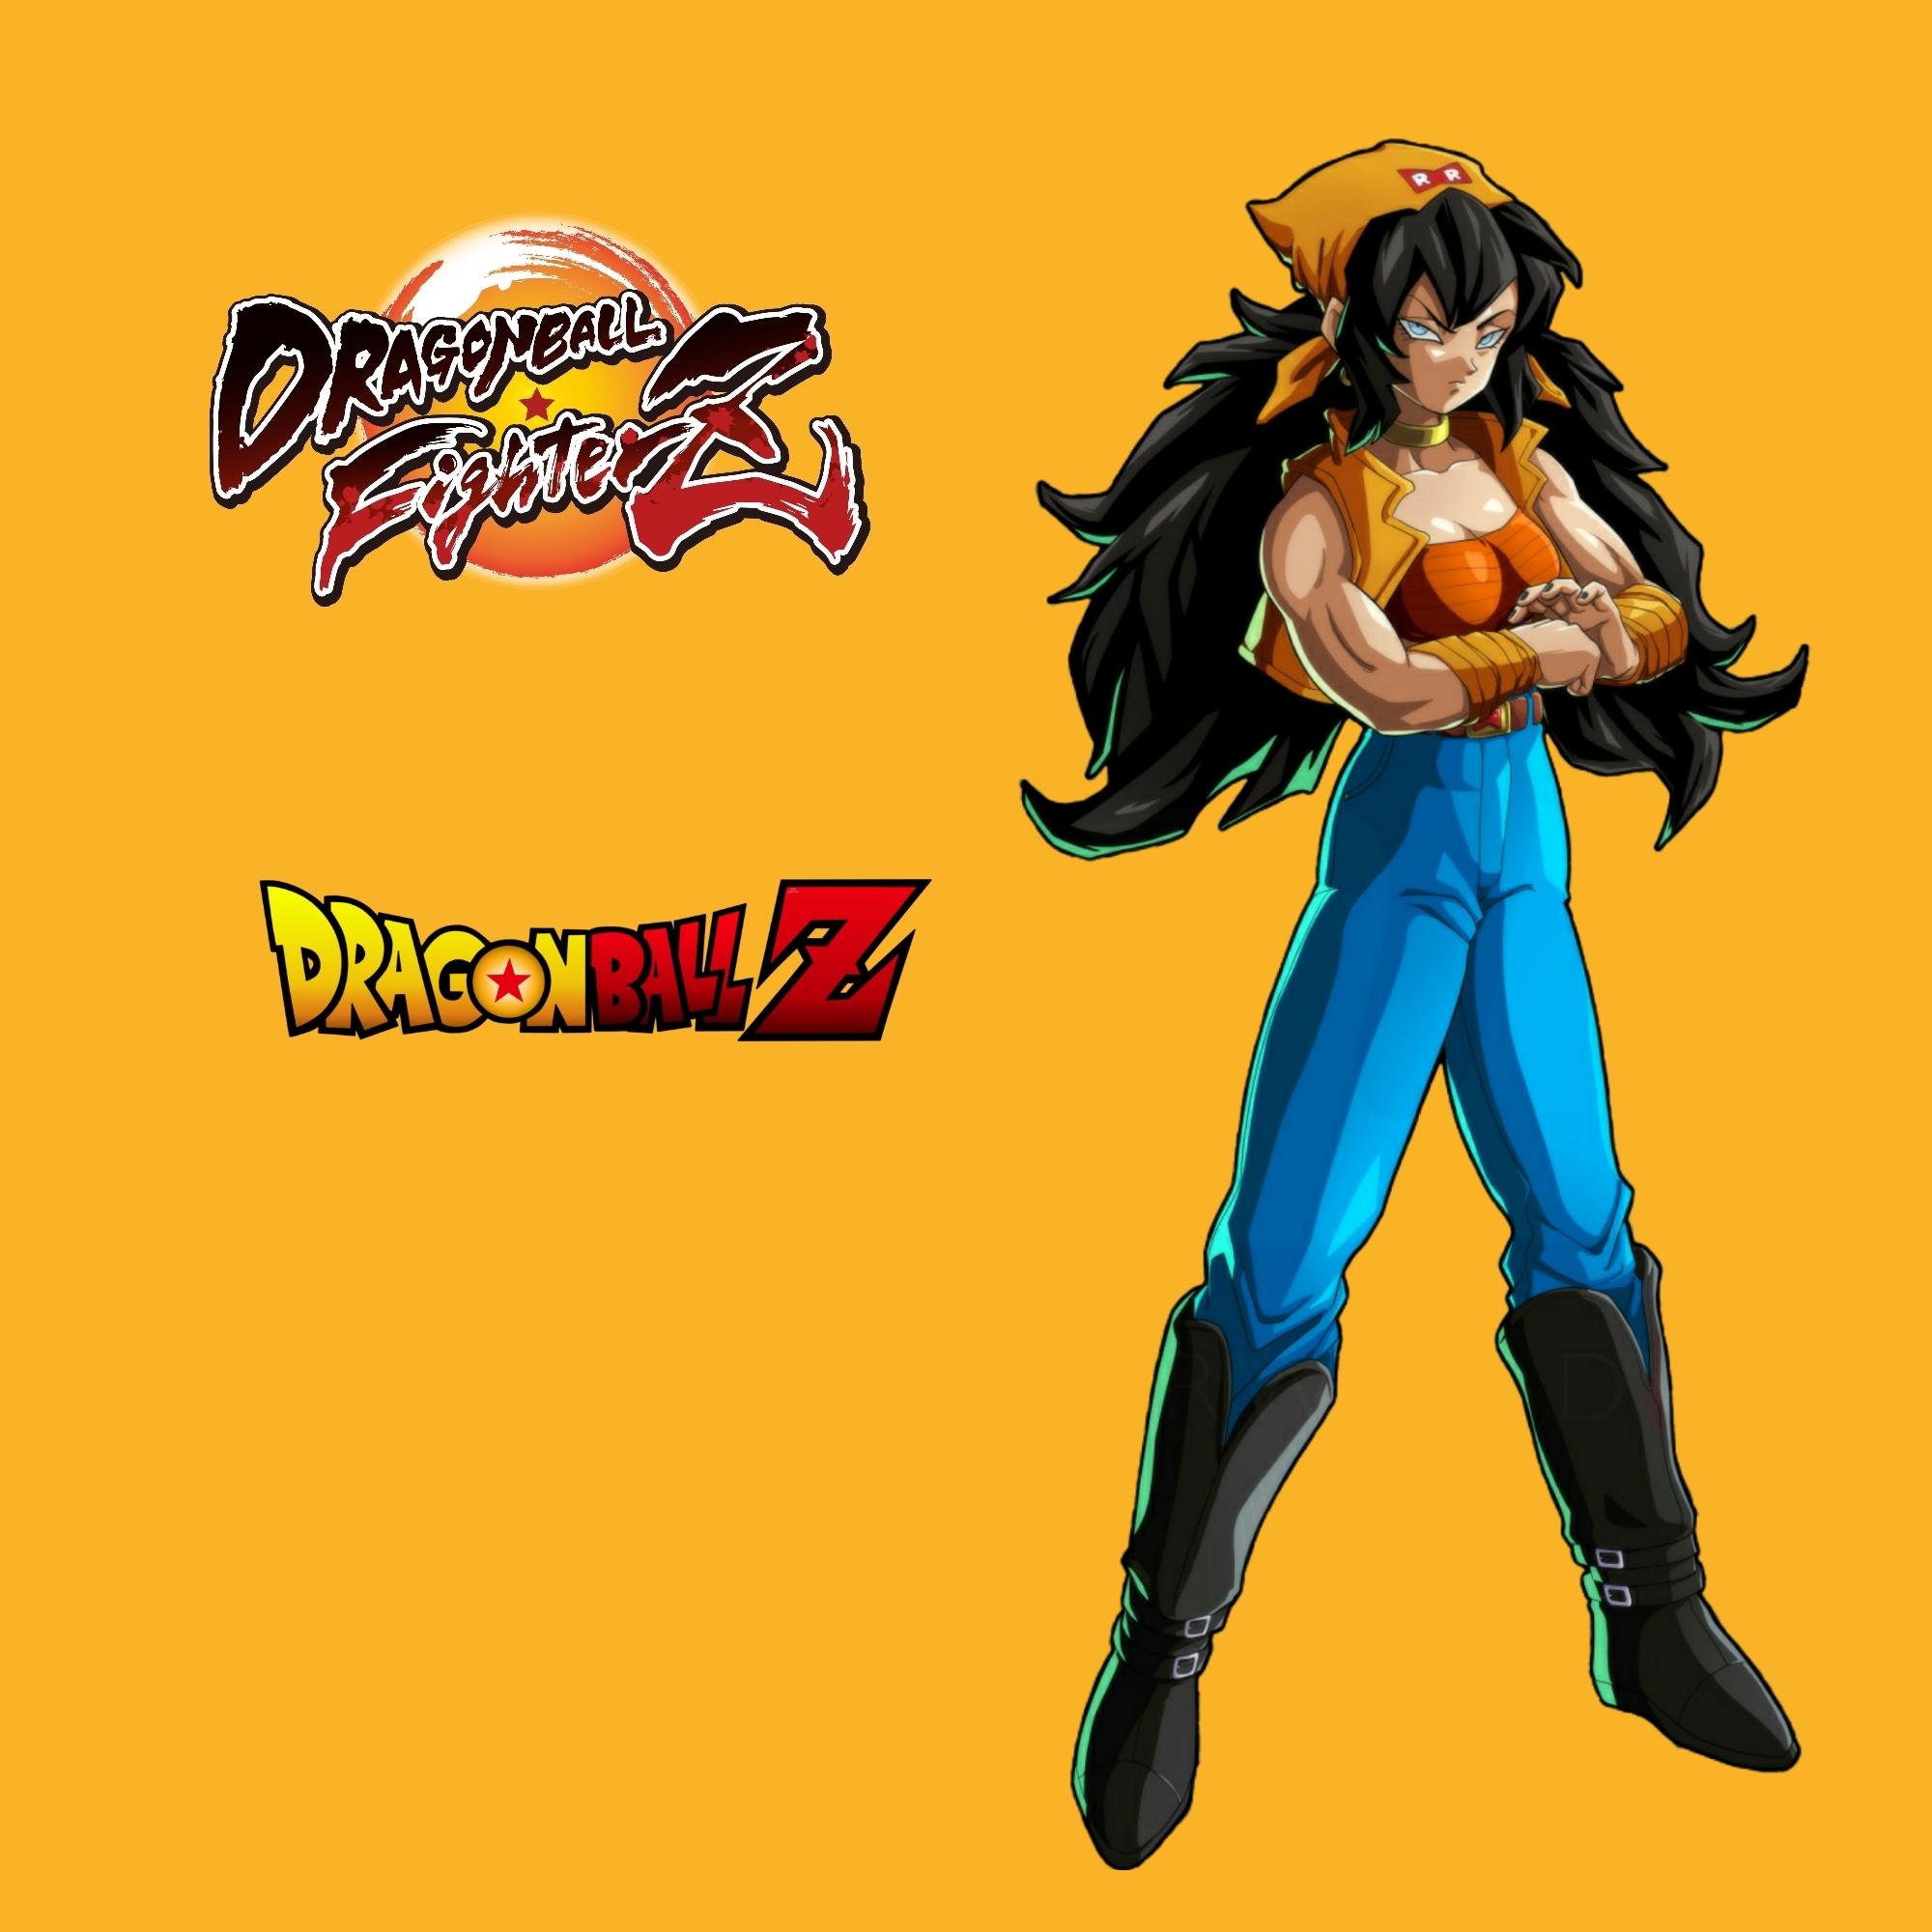 Dragon Ball OC - Android #22 by GoketerHC on DeviantArt